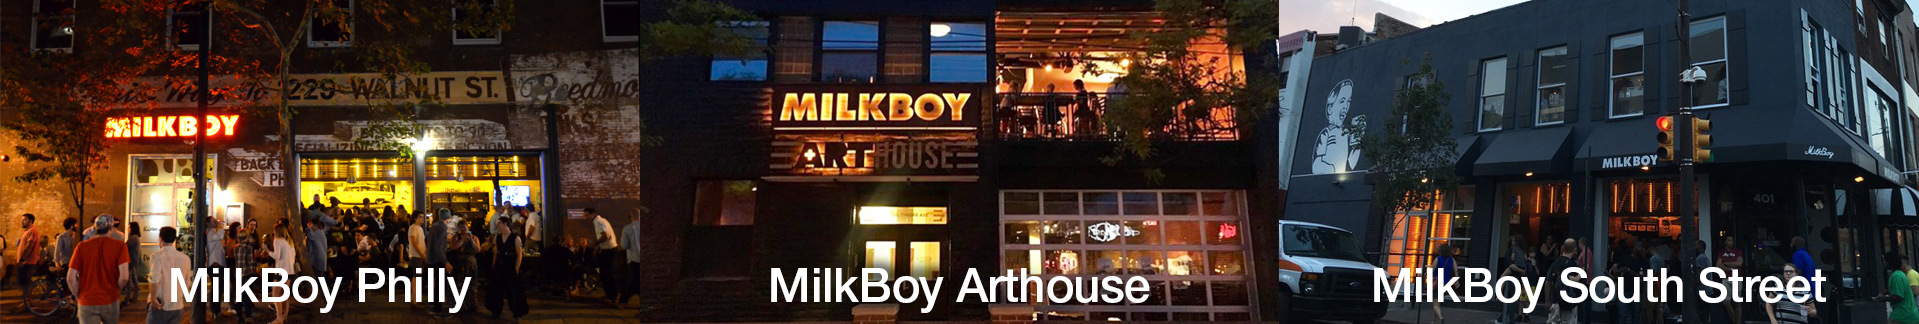 MilkBoy-Locations